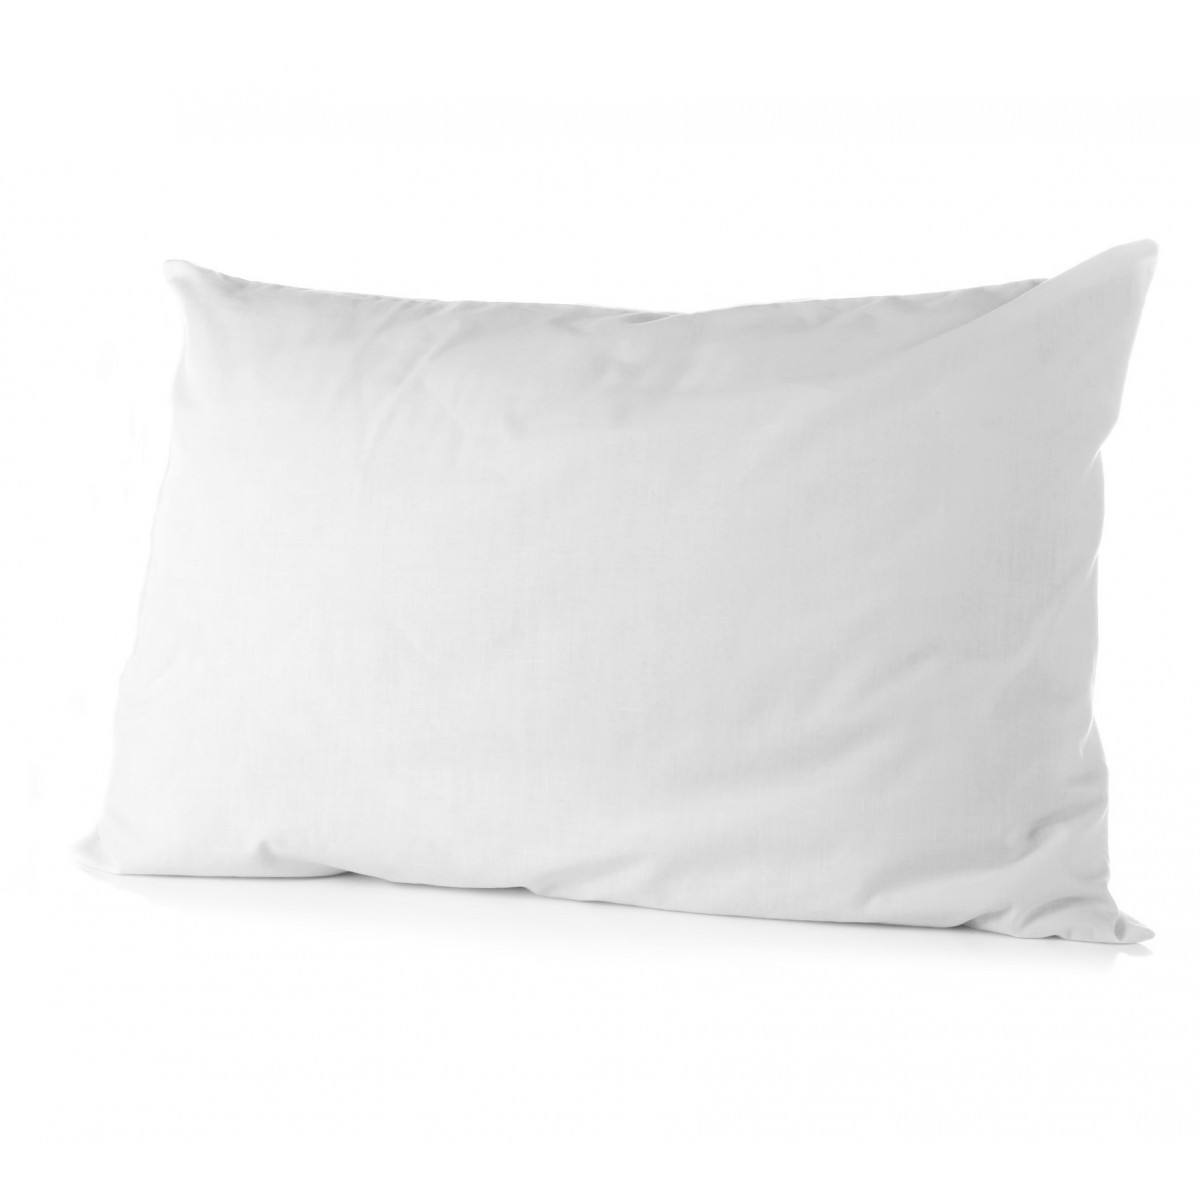 ALPHA CENTAURI Oreiller confort Percale/Microfibre - Blanc - 50x70 cm